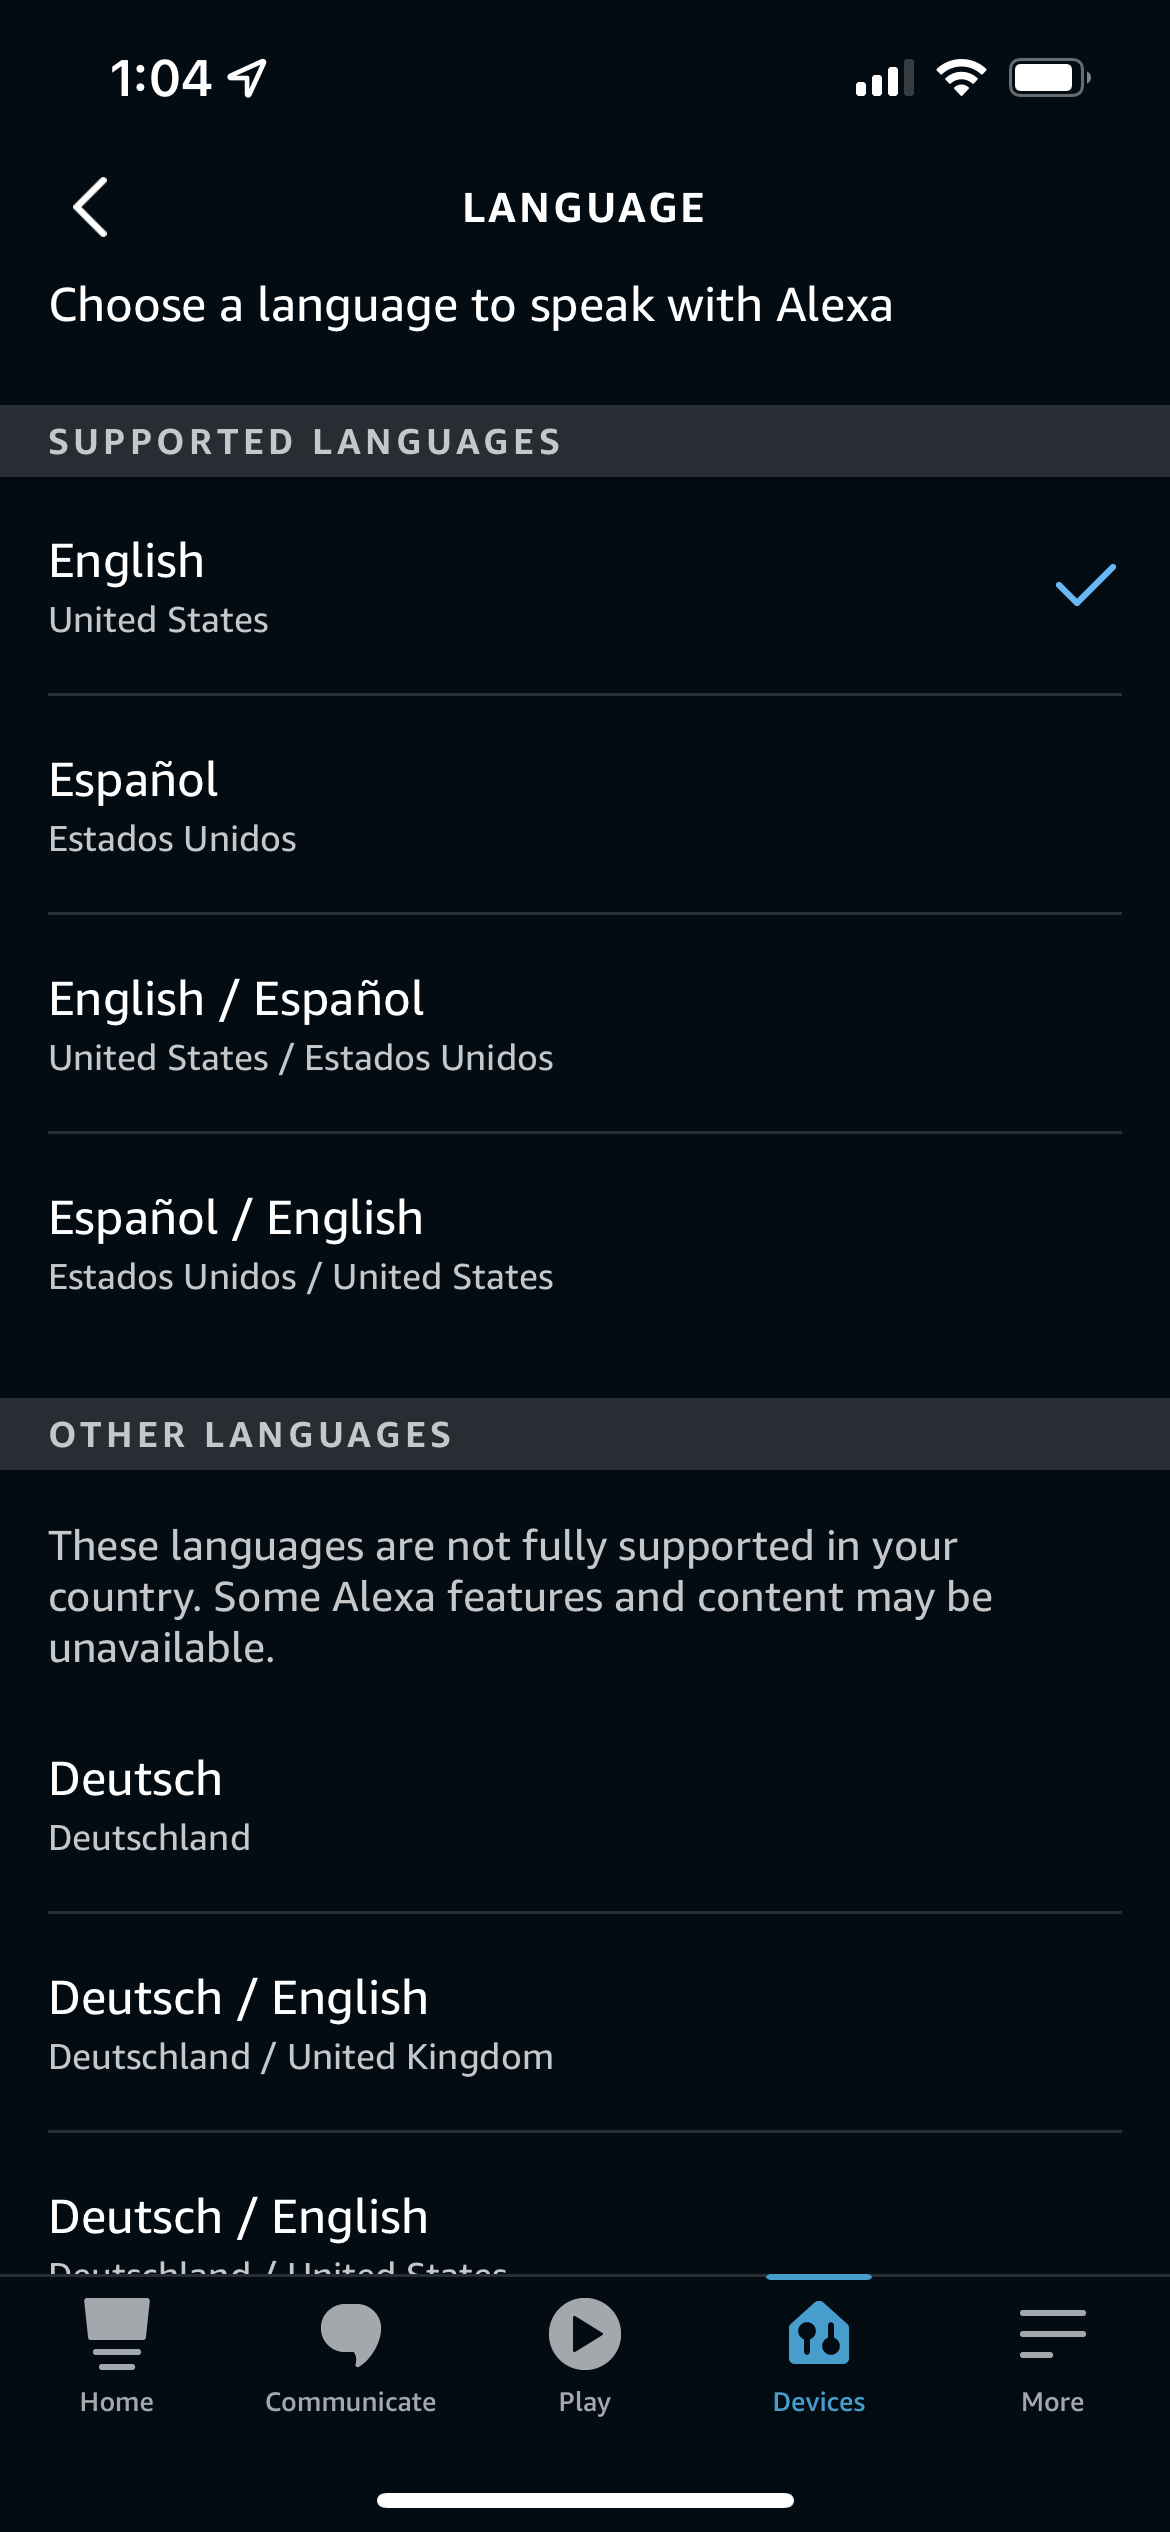 Choosing languages in the Alexa app